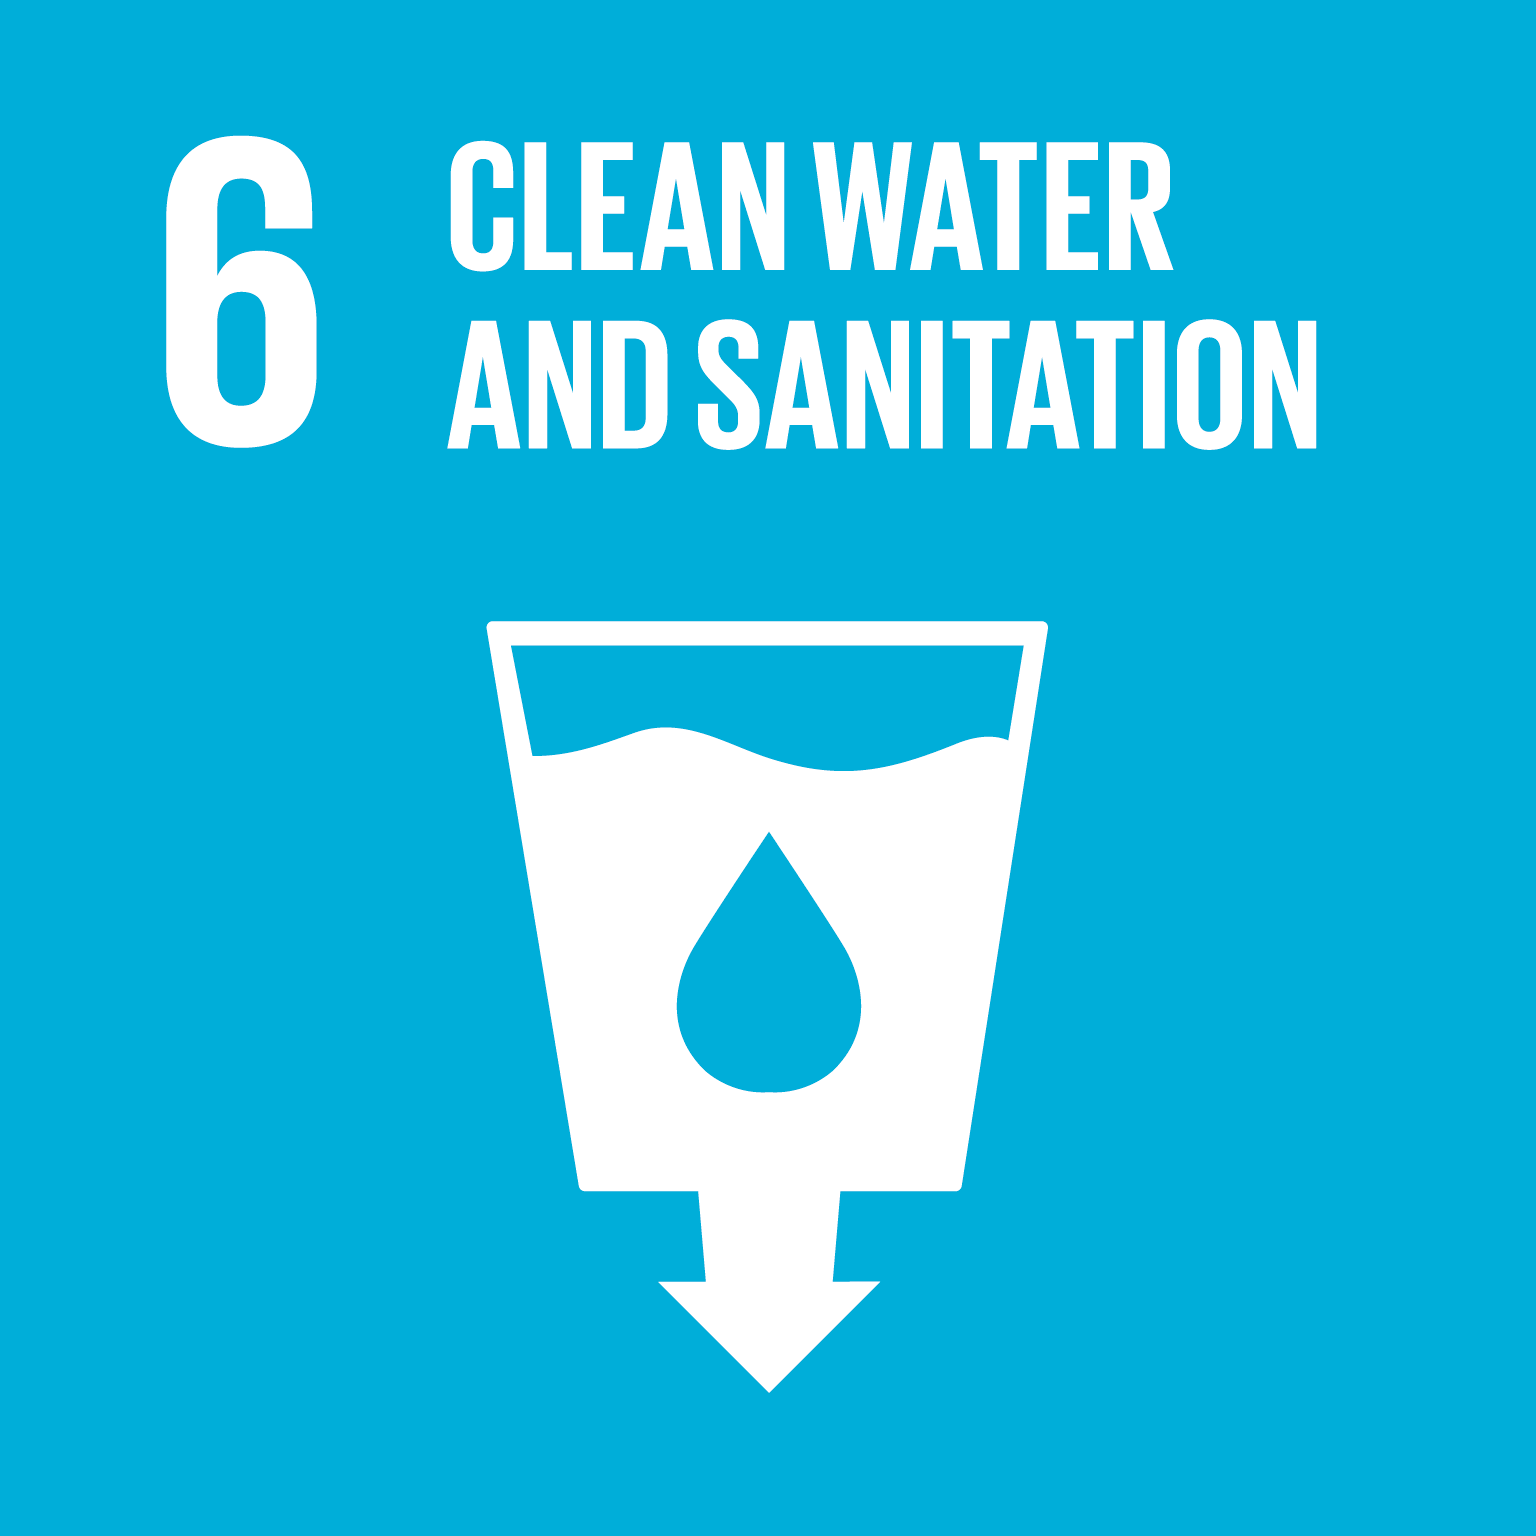 SDG - 6: Clean water and sanitation